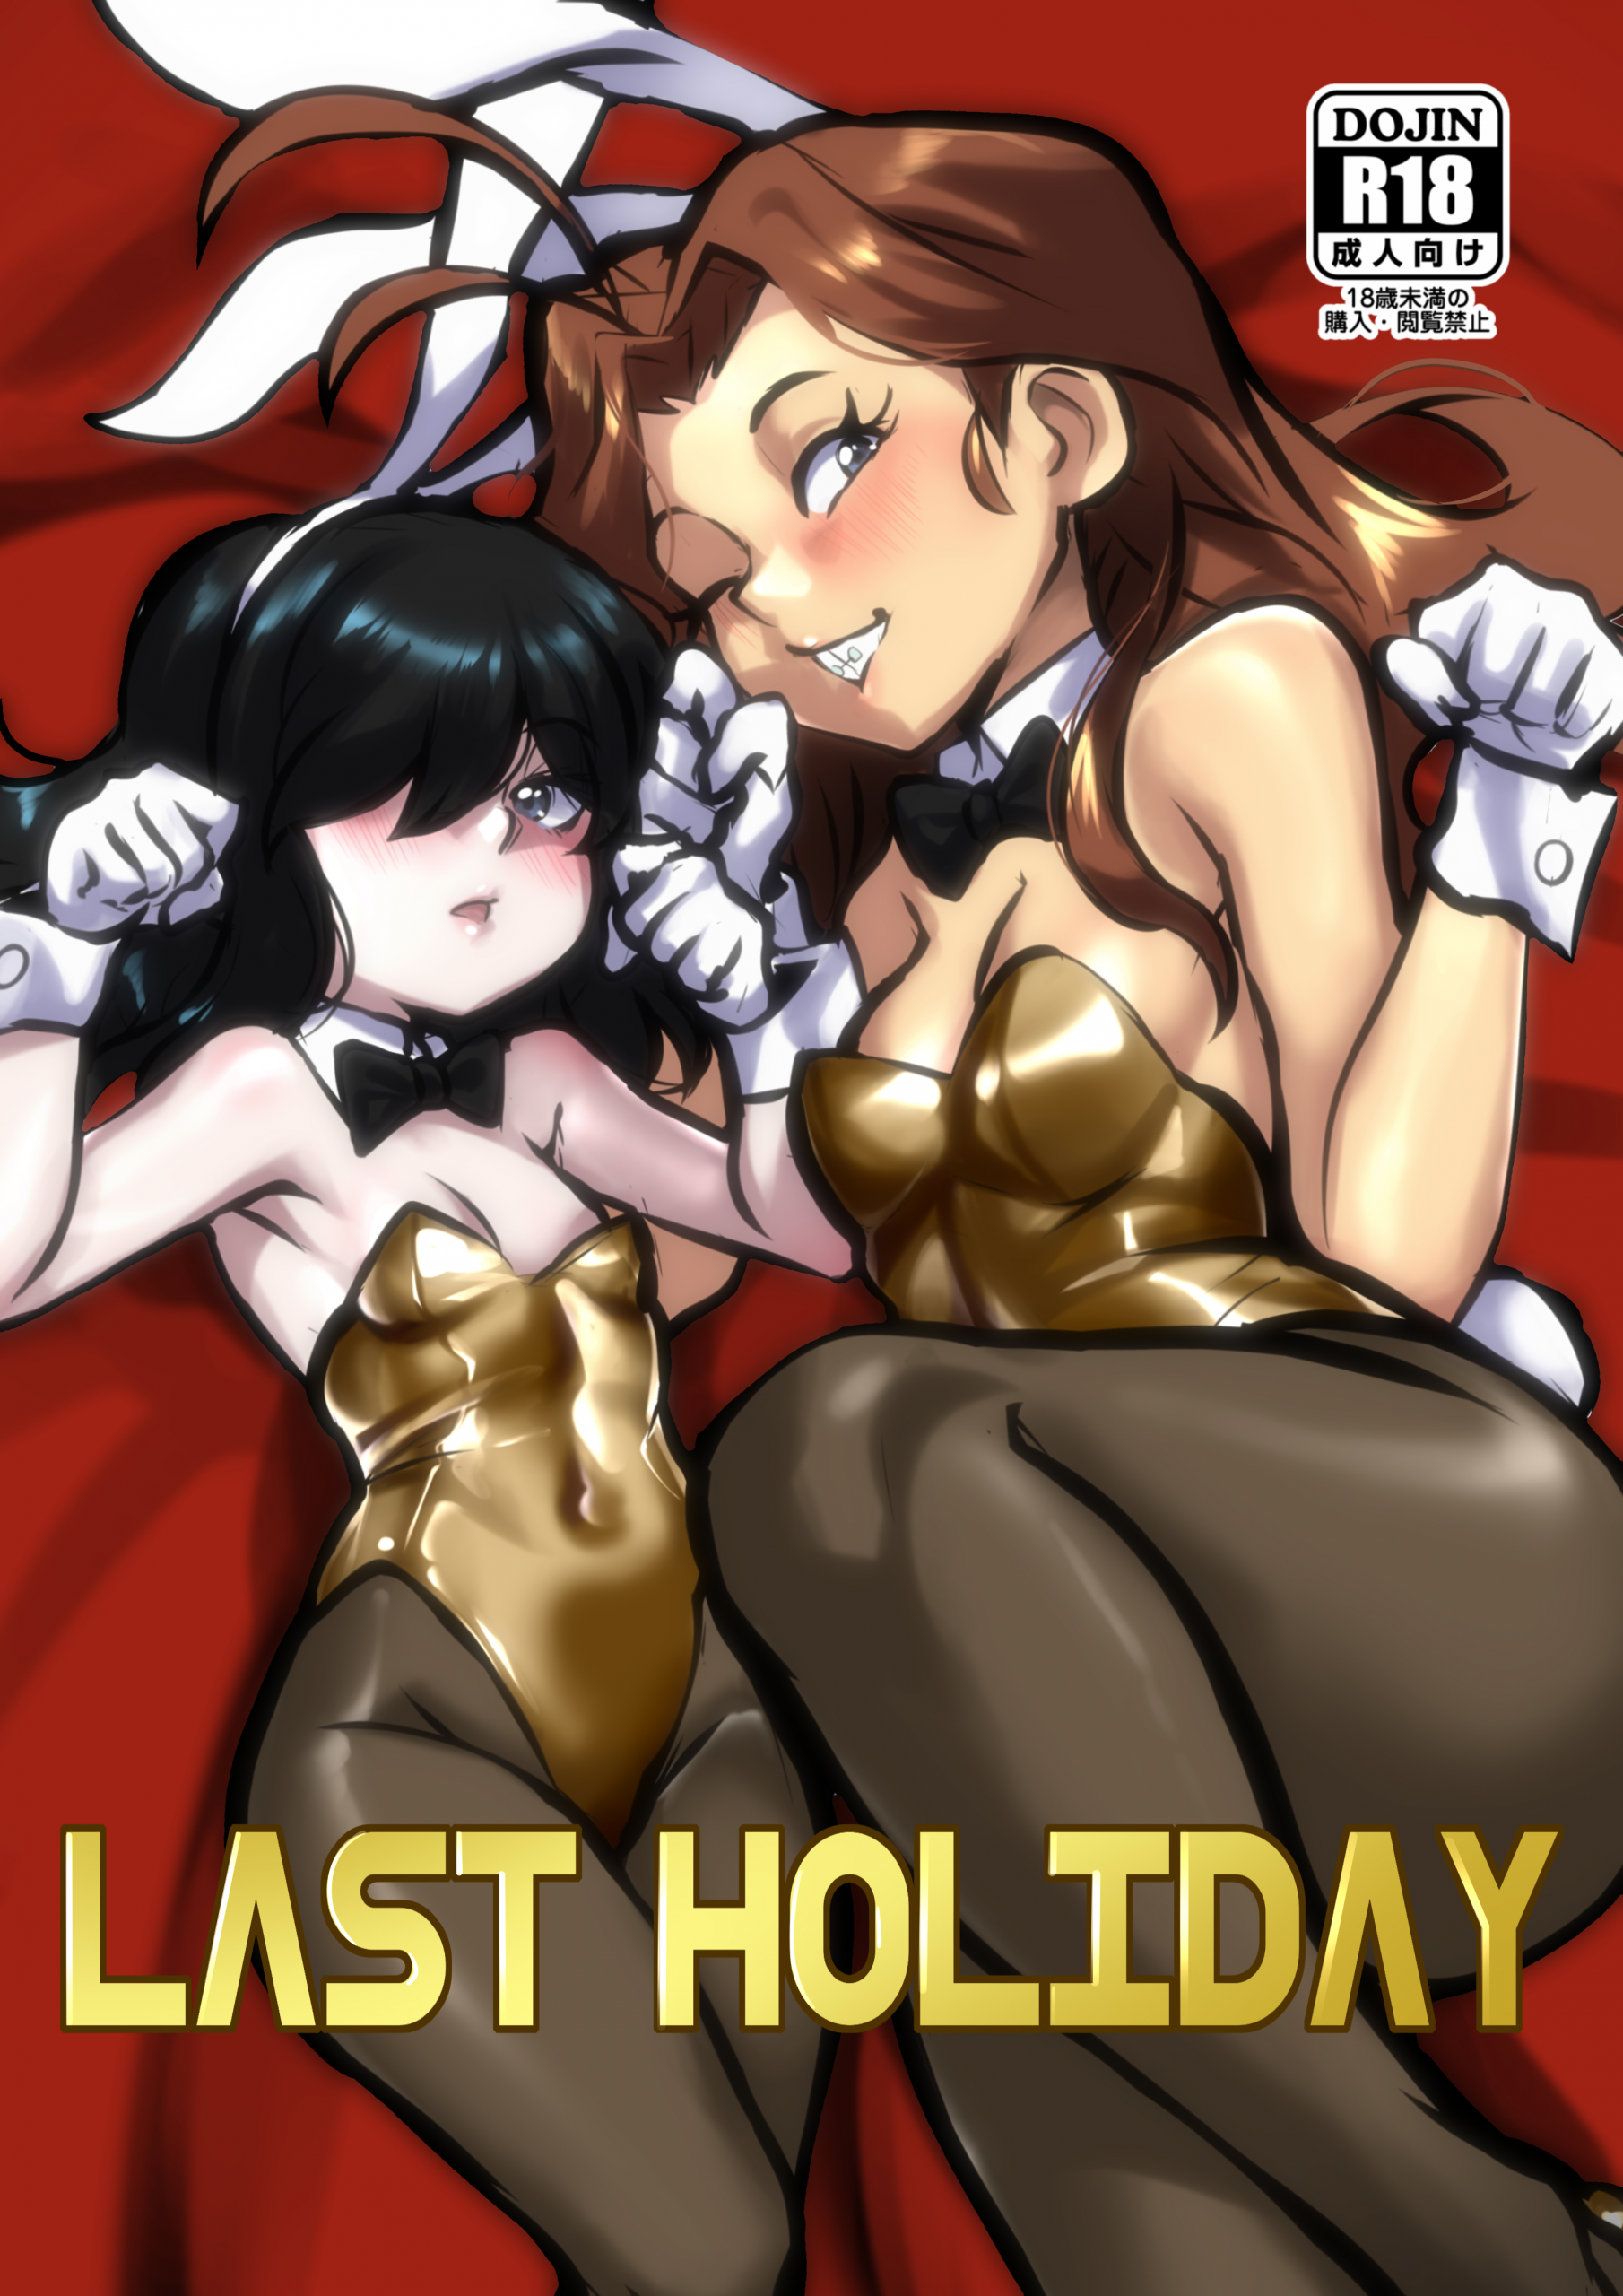 Holiday Porn Art - Last Holiday Porn comic, Rule 34 comic, Cartoon porn comic - GOLDENCOMICS